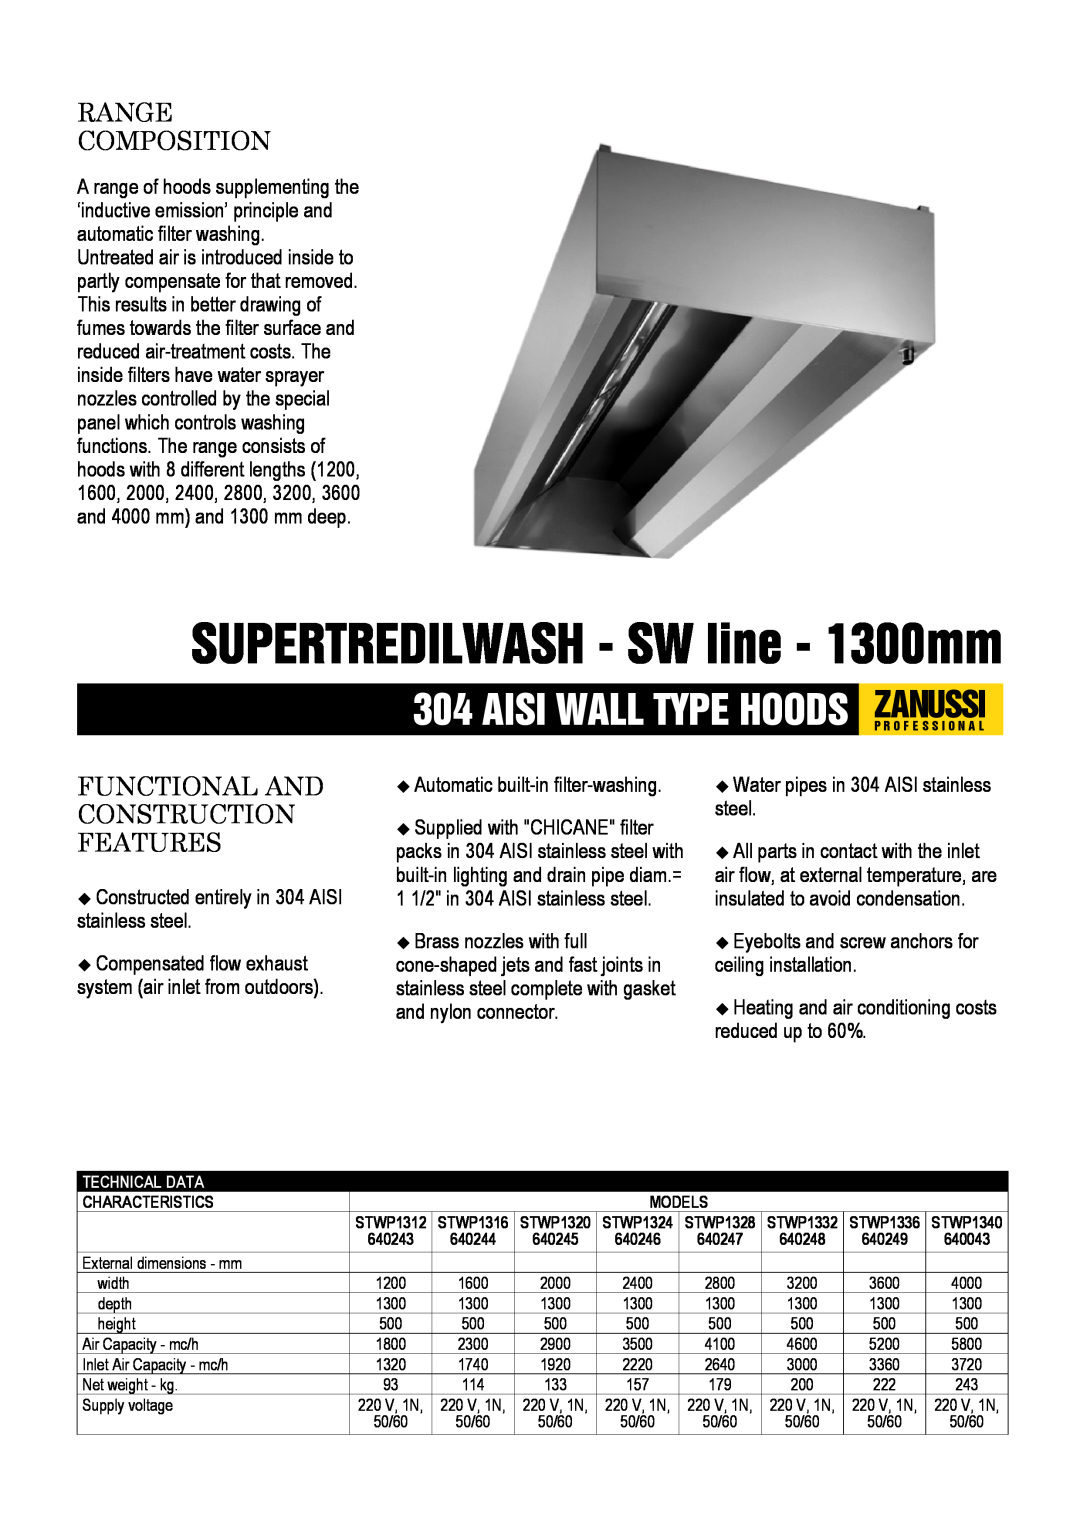 Zanussi 640247, 640249 dimensions SUPERTREDILWASH - SW line - 1300mm, Aisi Wall Type Hoods Zanussip R O F E S S I O N A L 